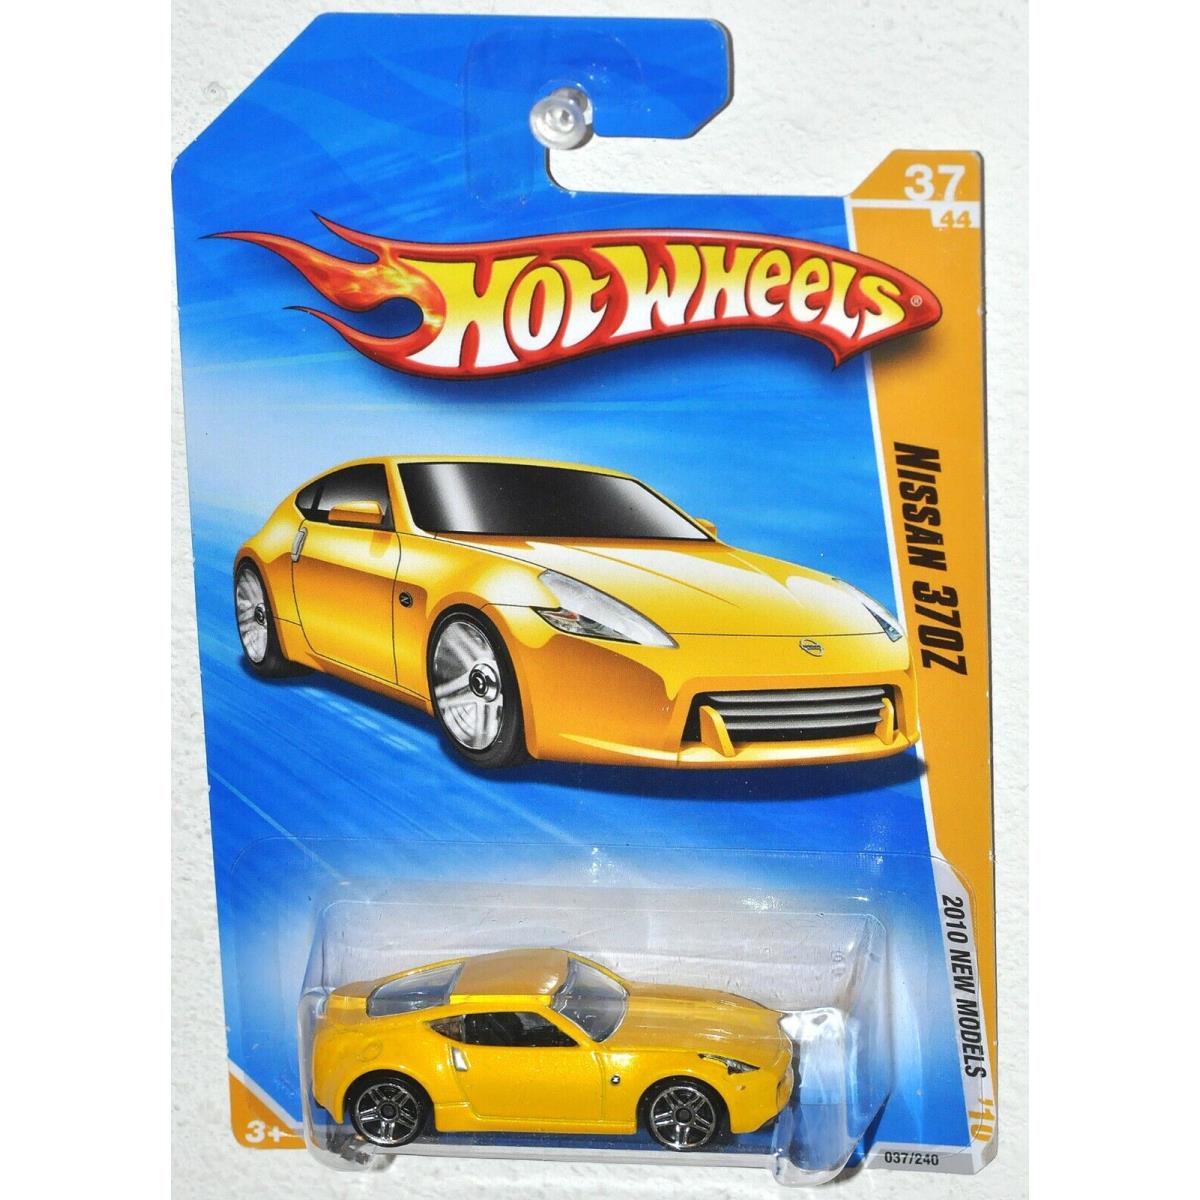 Hot Wheels 2010 Models 37 Nissan 370Z Yellow Moc R0957